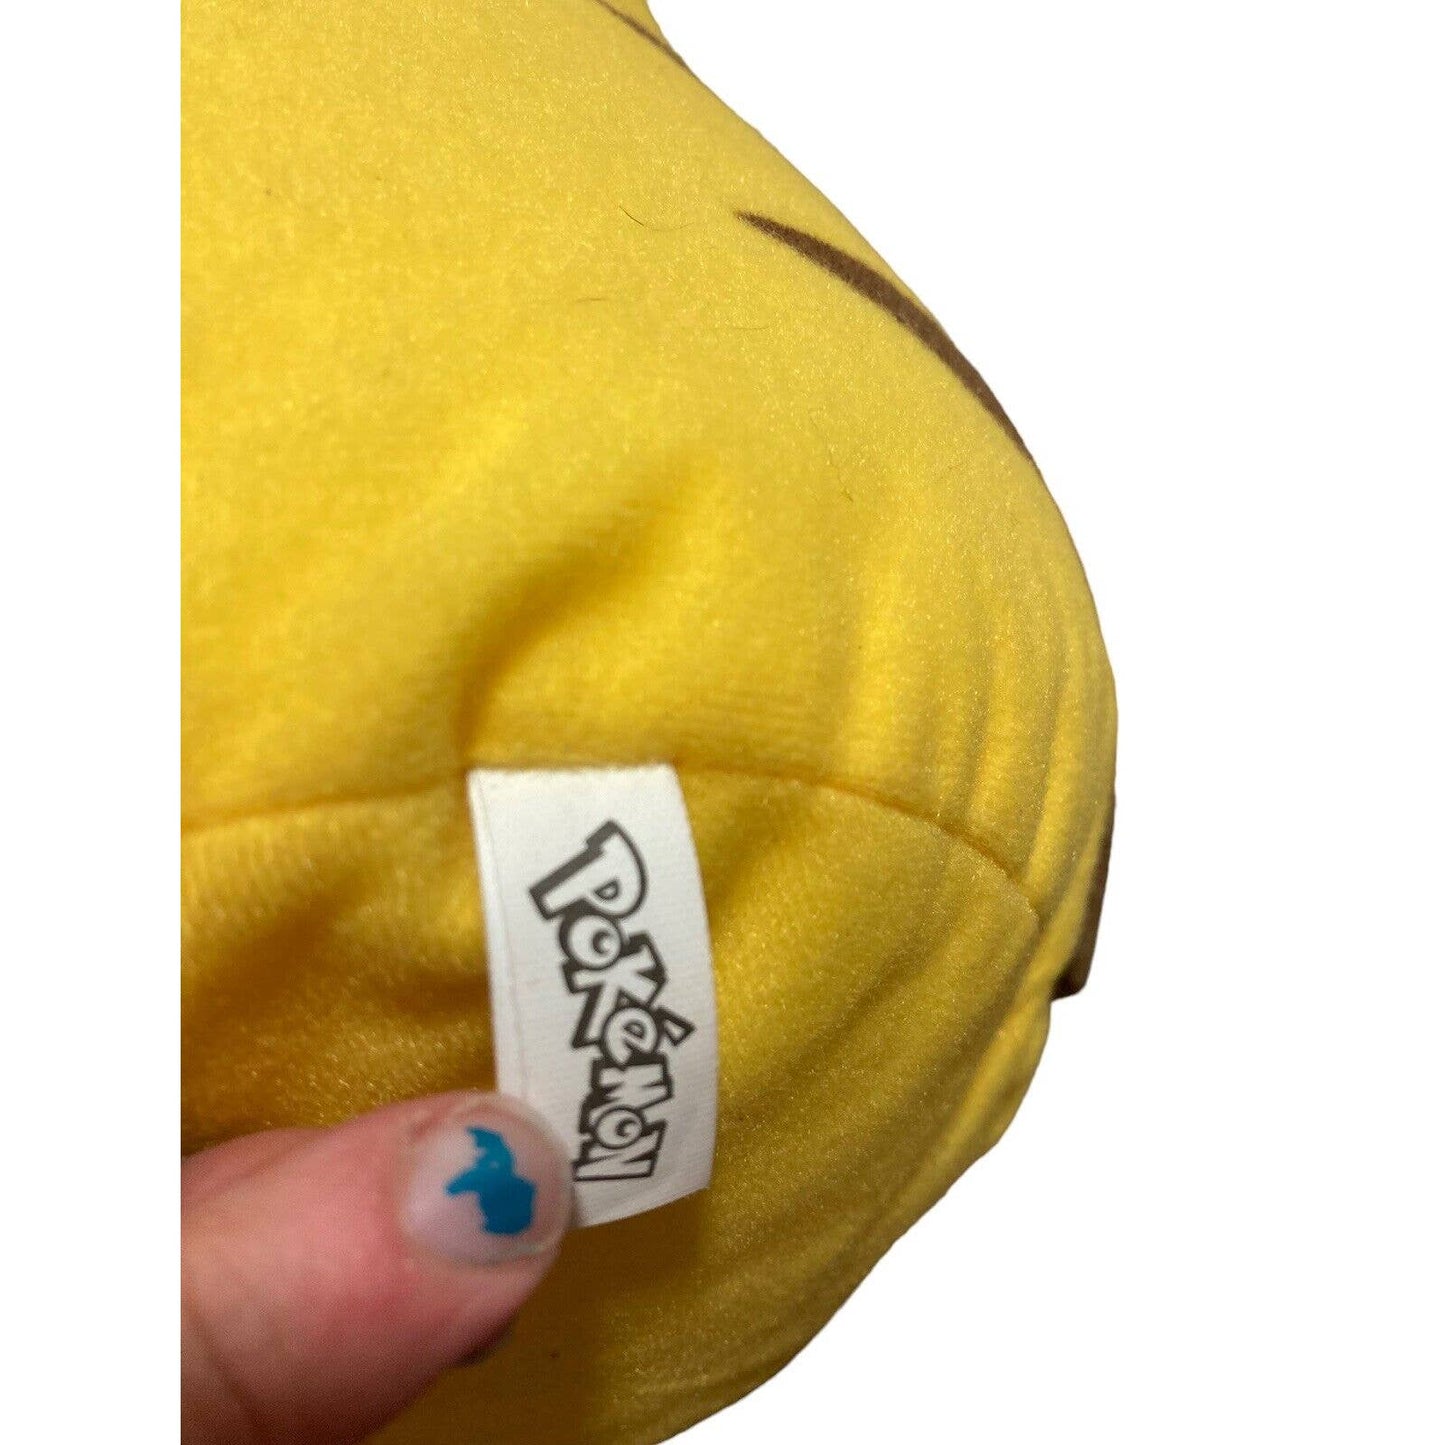 Toy Factory Nintendo Pokémon Pikachu 14” Stuffed Plush Toy Doll Bean Bag